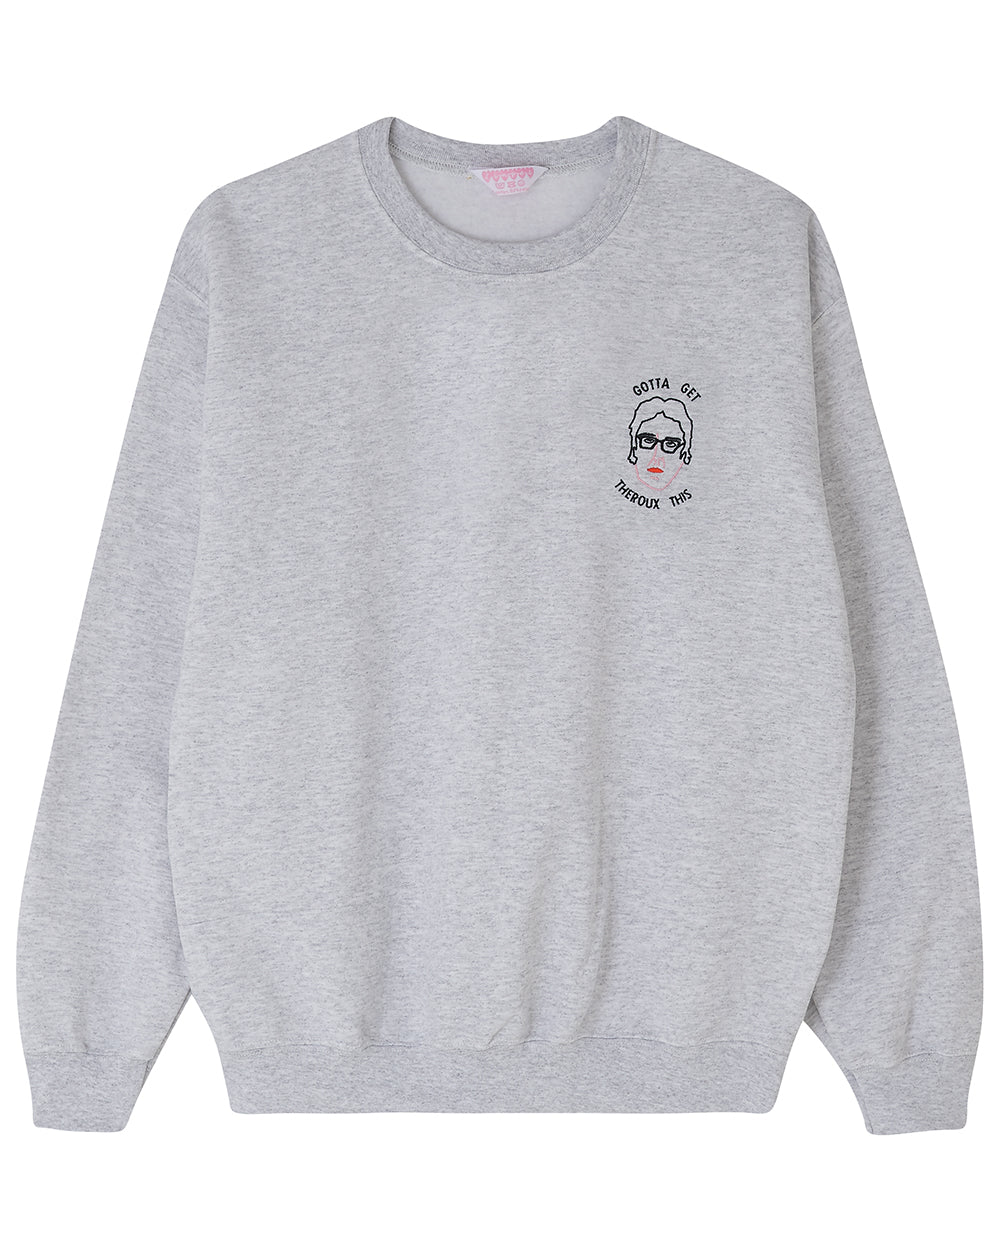 Gotta Get Theroux This Embroidered Sweatshirt